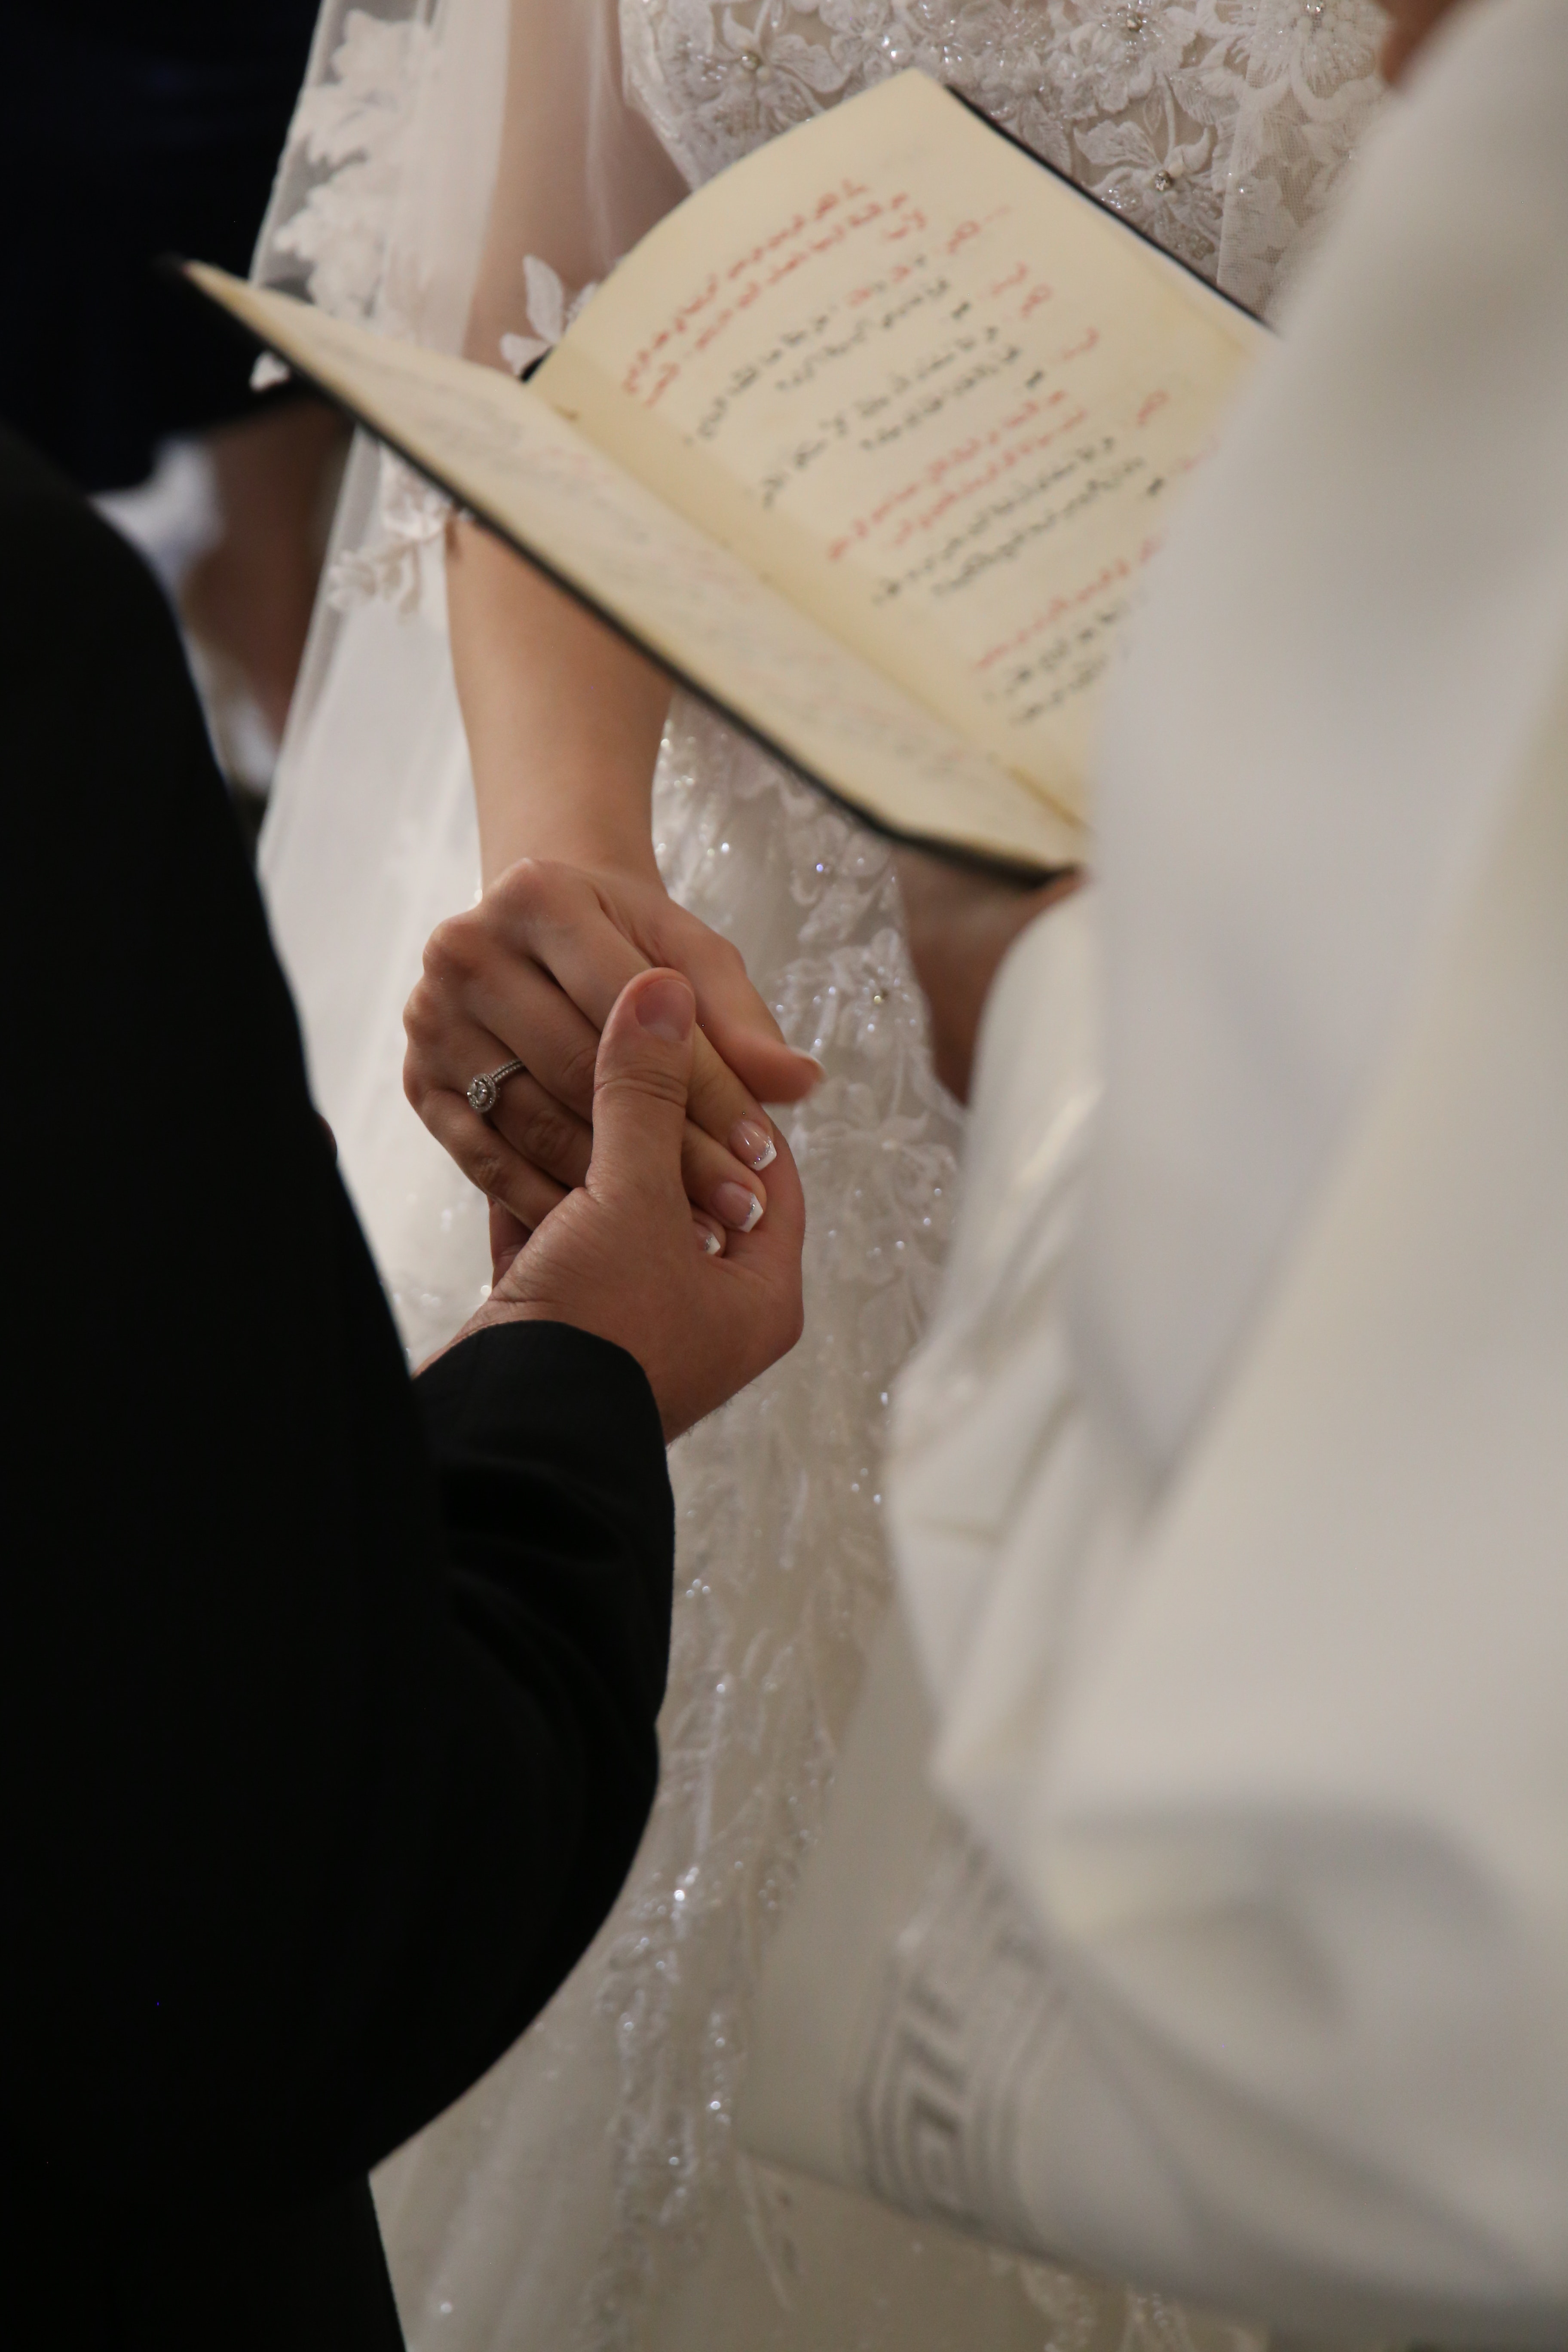 Newlyweds holding hands on wedding ceremony | Source: Pexels